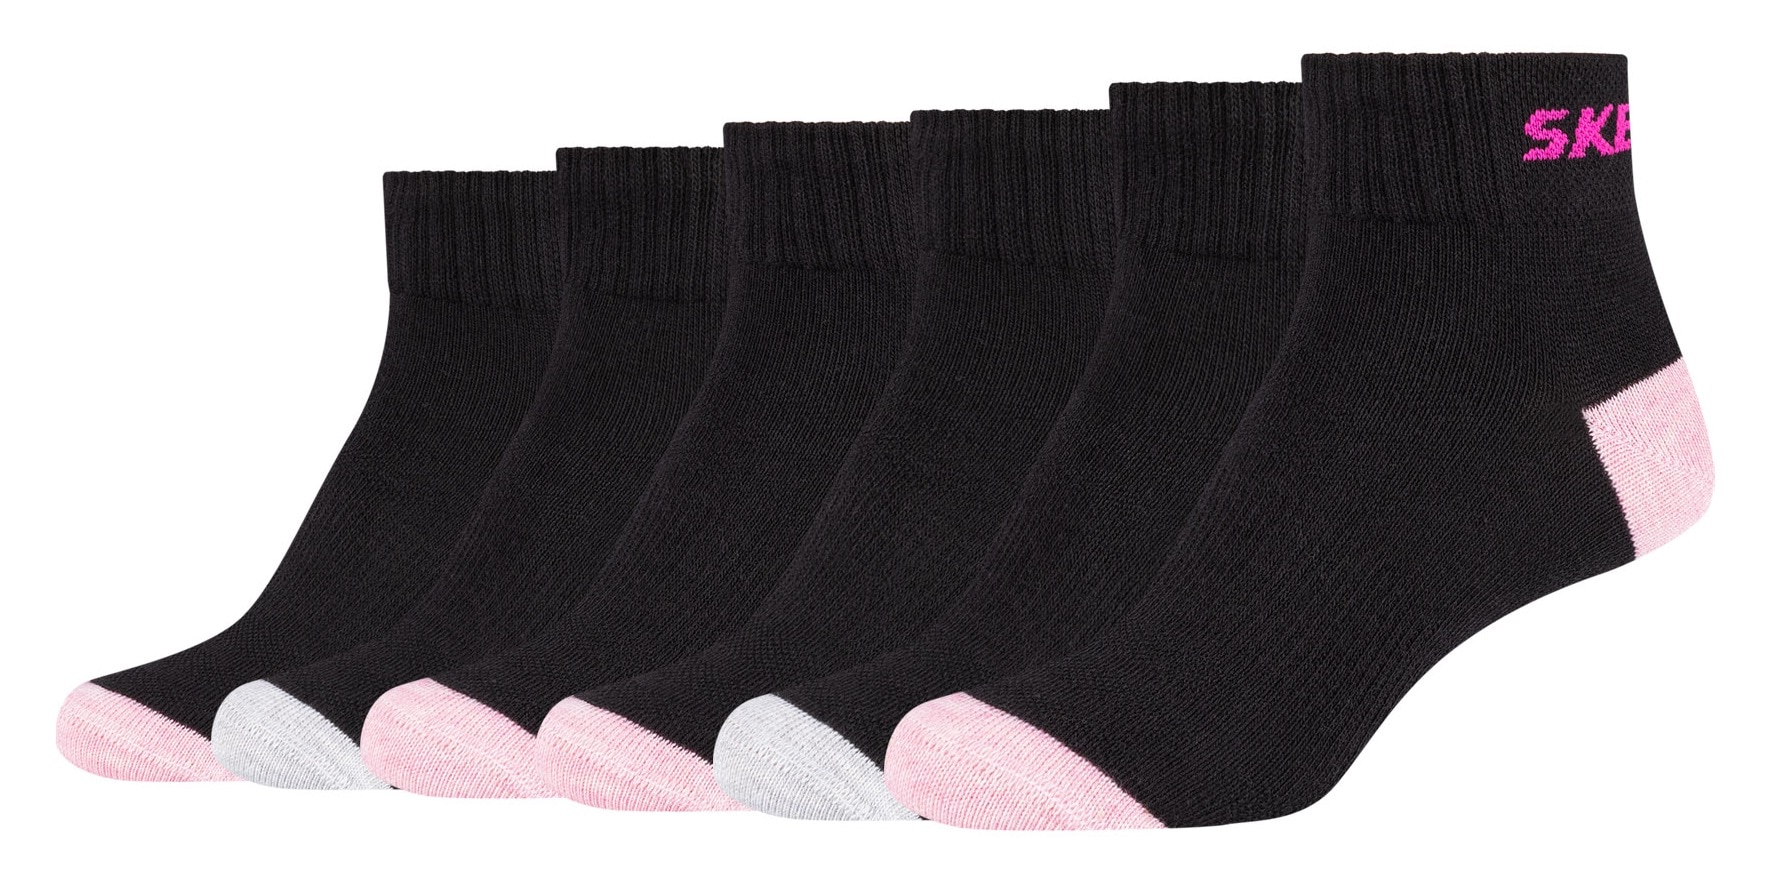 Skechers Socken, (6 Paar), (6 Paar) mit Mesh-Ventilation System kaufen